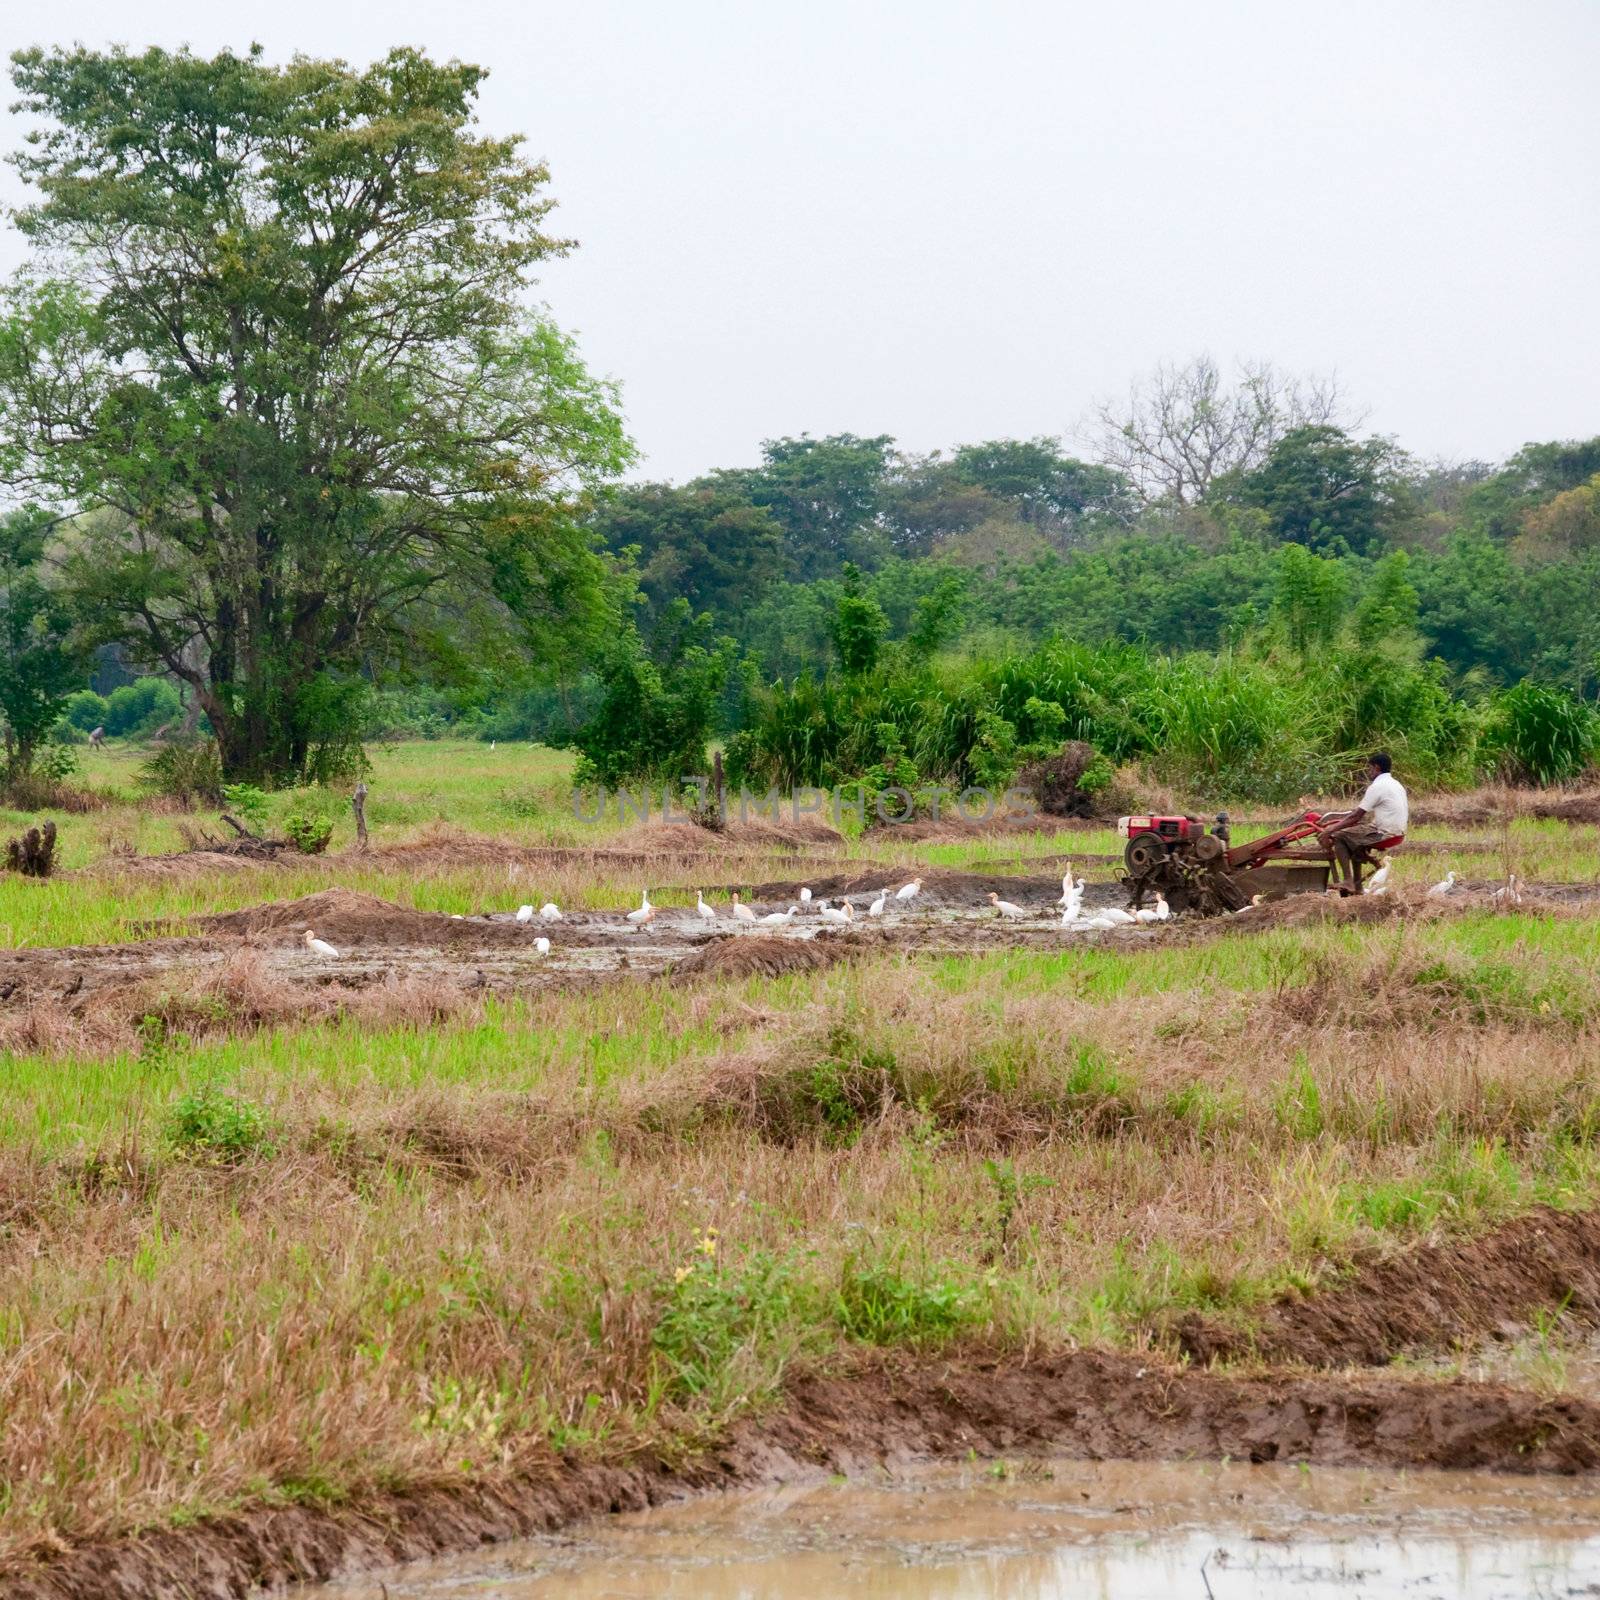 A man with a motor plow in a rice field, Sri Lanka by iryna_rasko